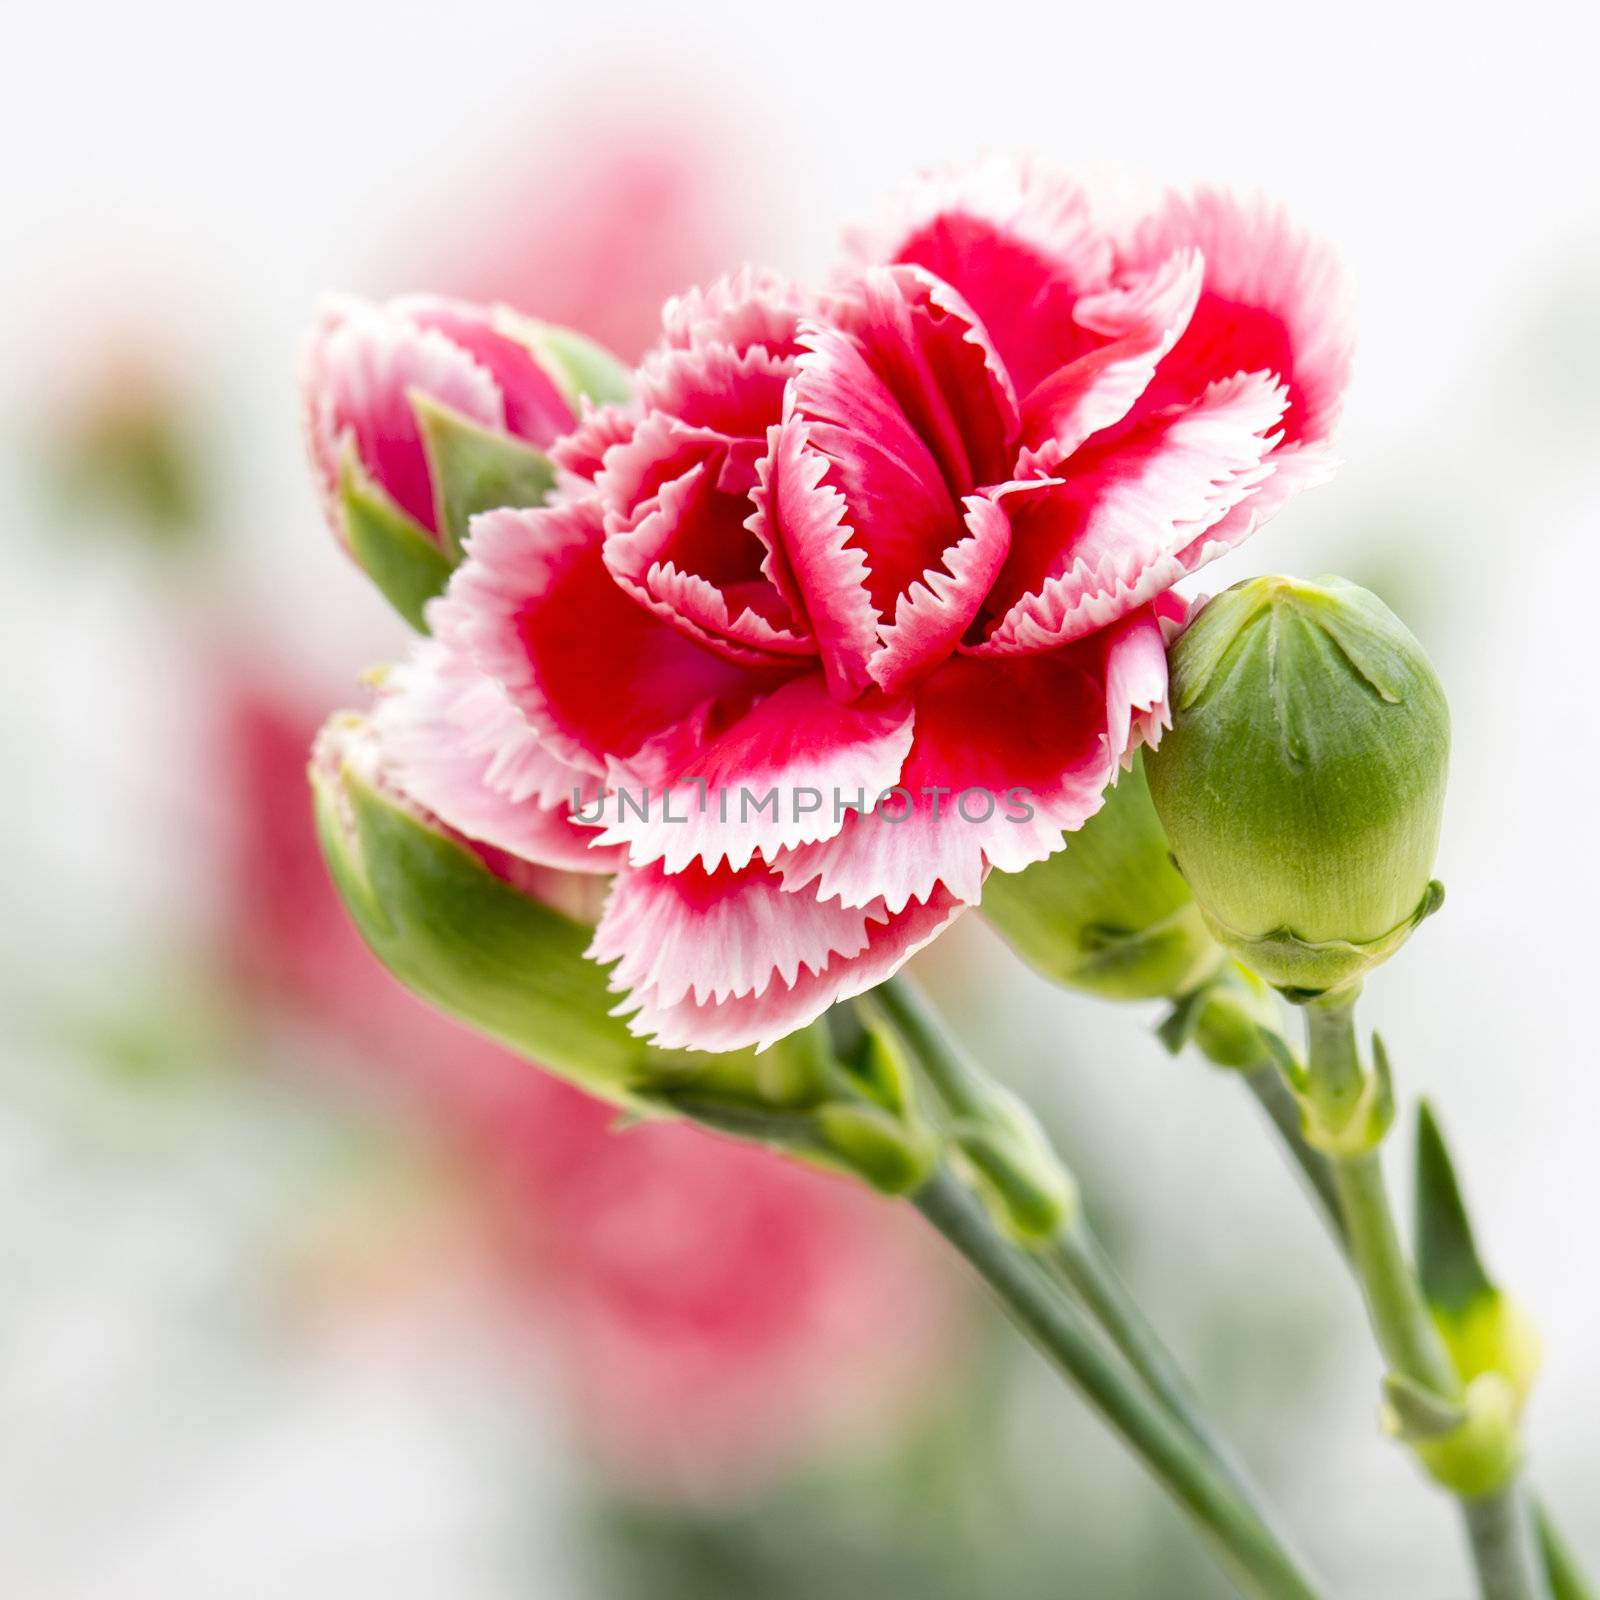 Carnations by miradrozdowski